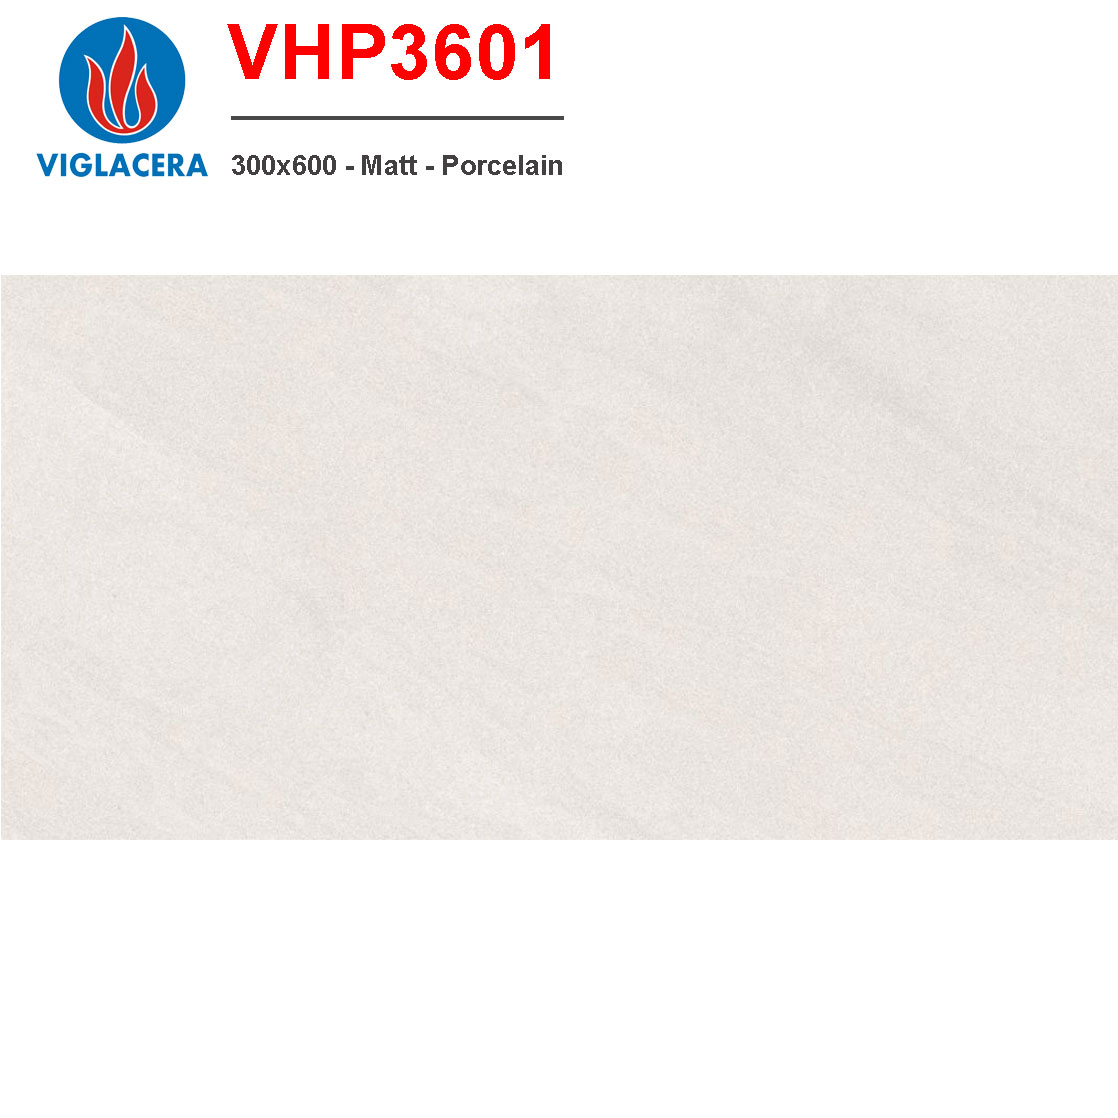 Gạch porcelain 300x600 Viglacera VHP3601 giá rẻ